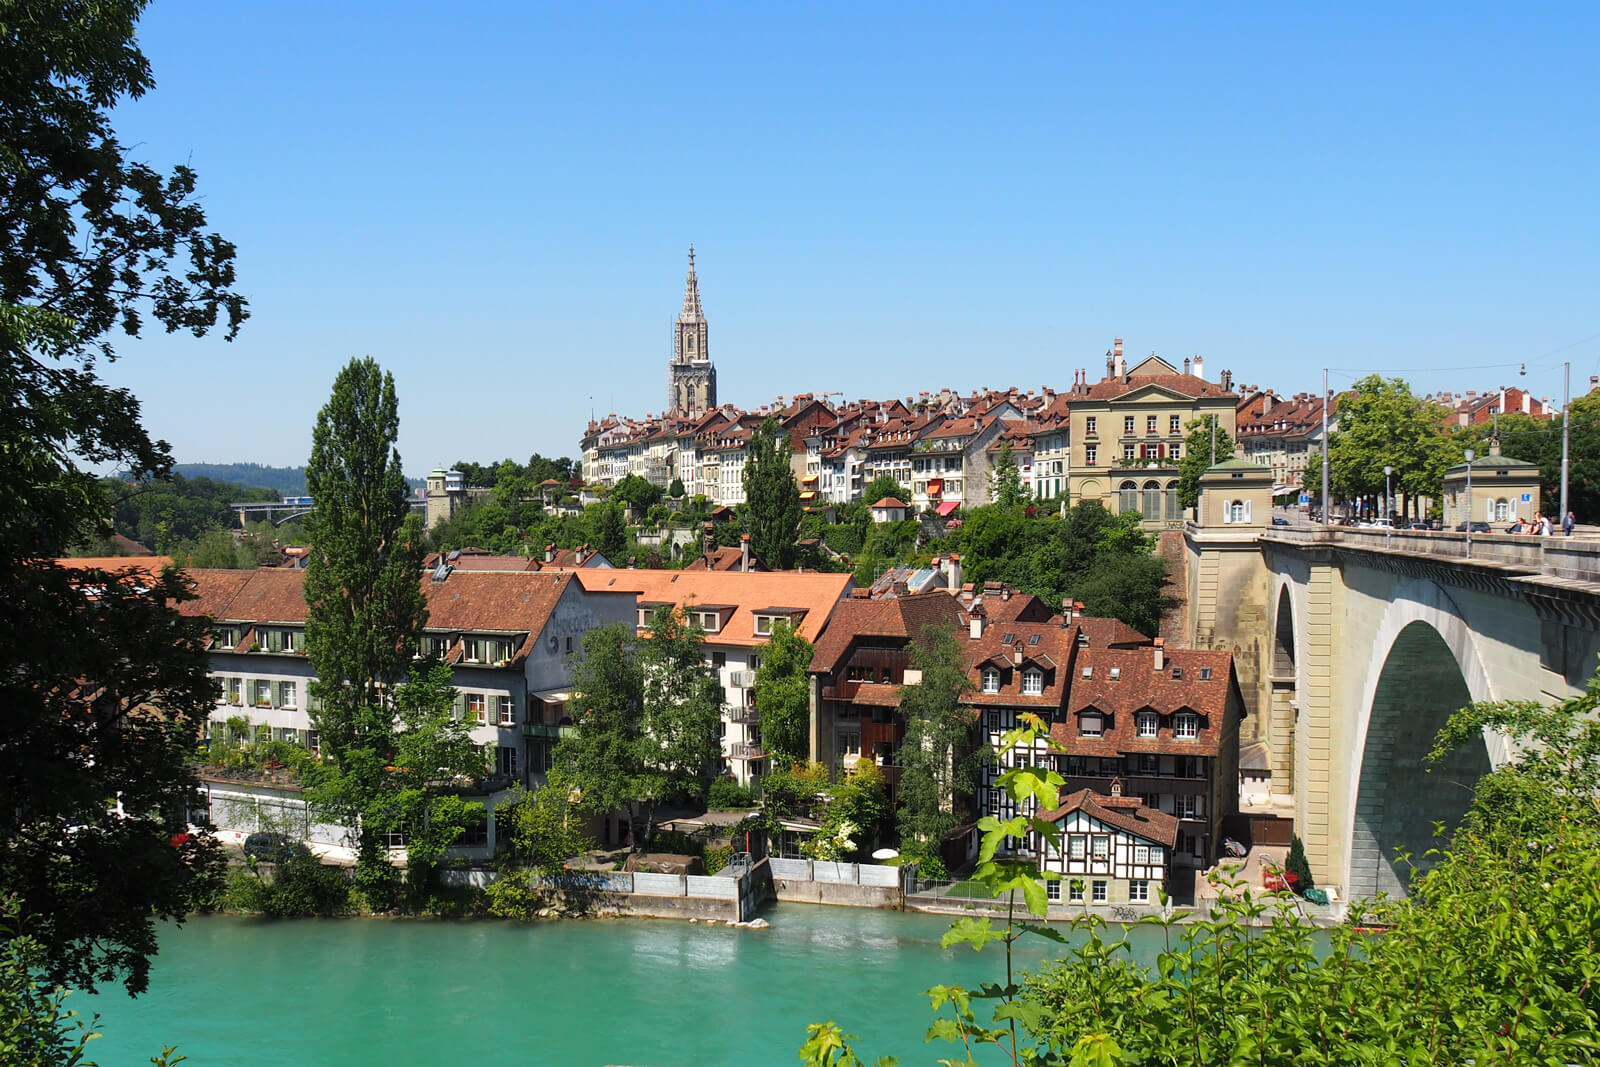 Bern's UNESCO World Heritage Old Town